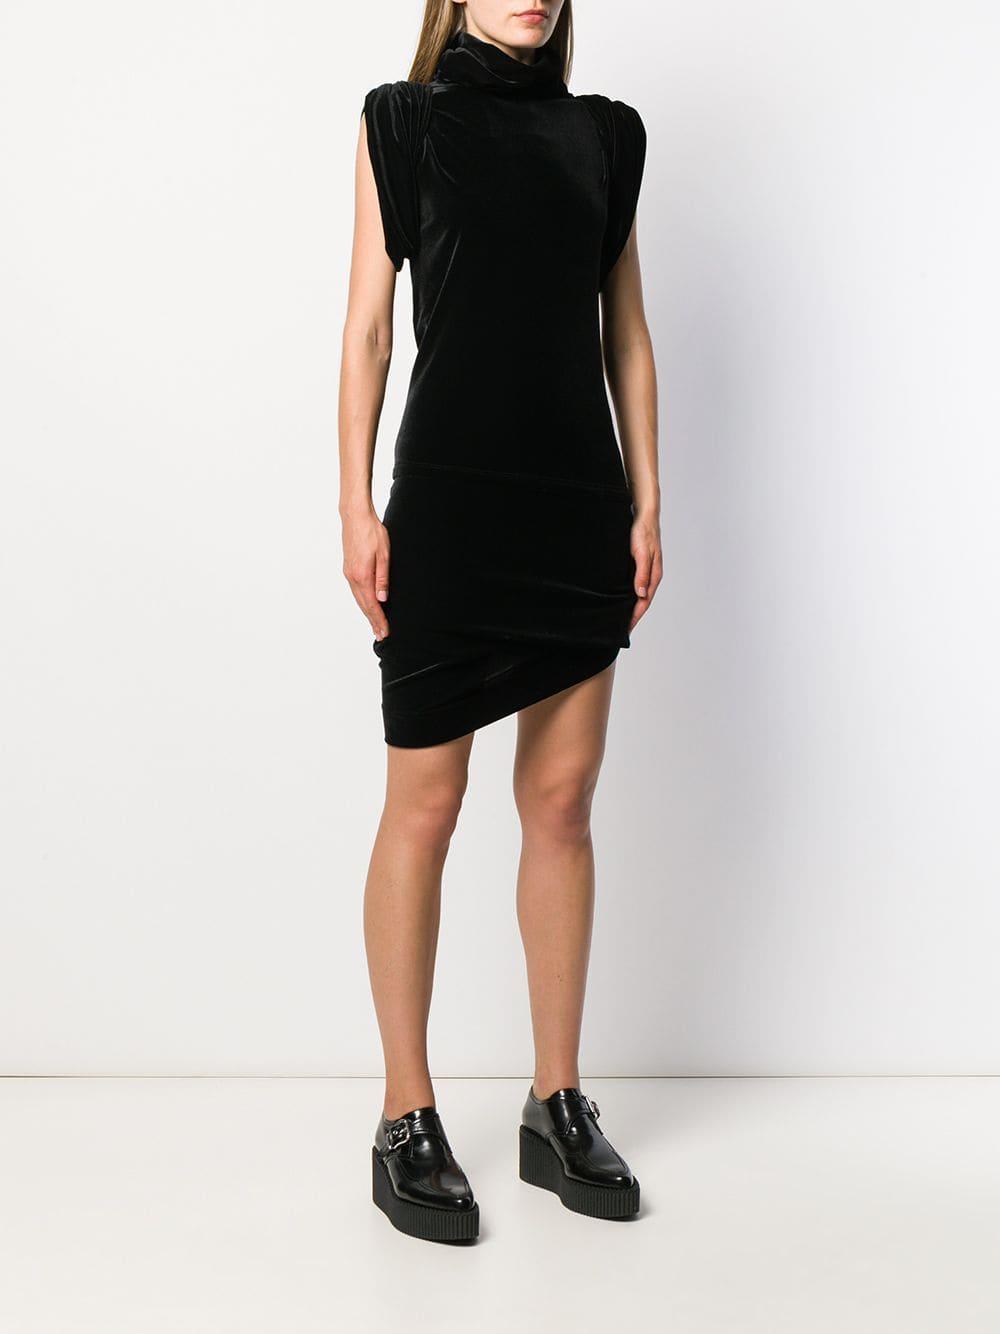 Vivienne Westwood Anglomania Punkature Velvet Dress in Black - Lyst